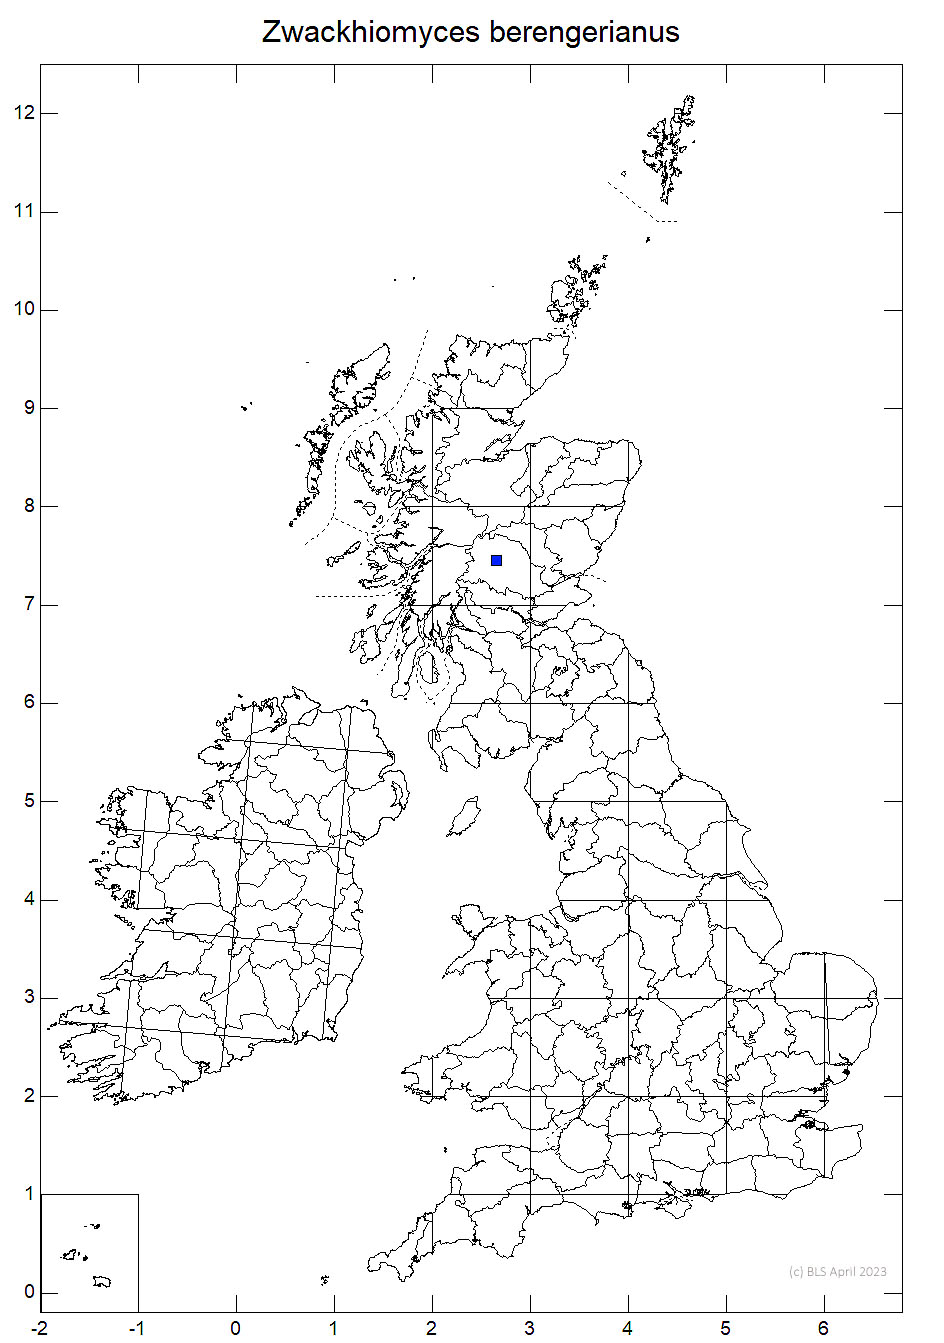 Zwackhiomyces berengerianus 10km sq distribution map